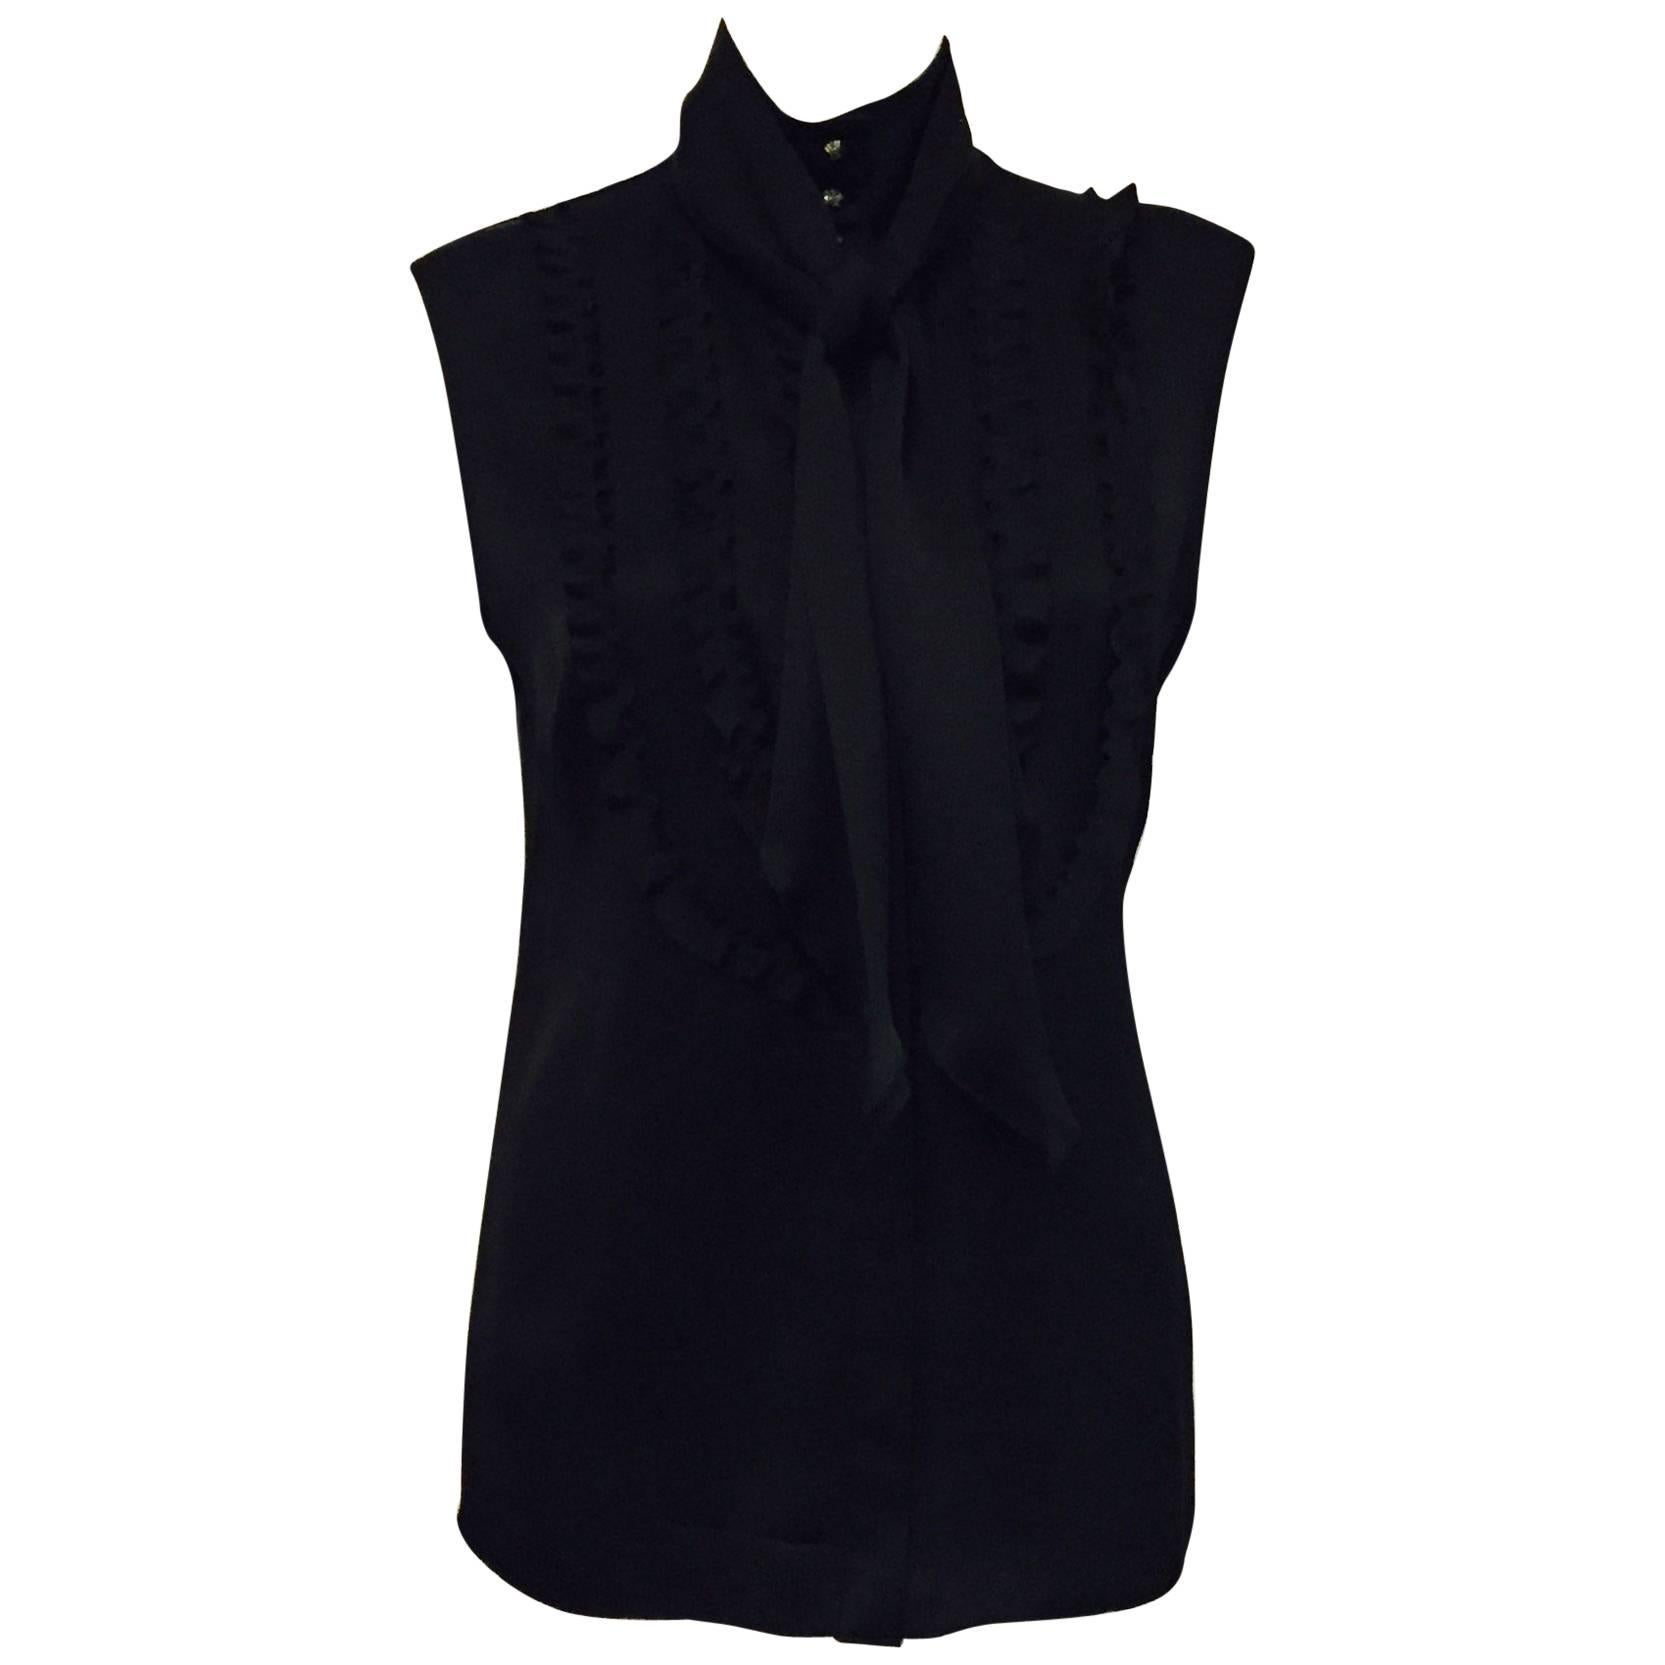 Conceptually Creative Chanel Black Silk Tuxedo Style Blouse with Up Collar For Sale